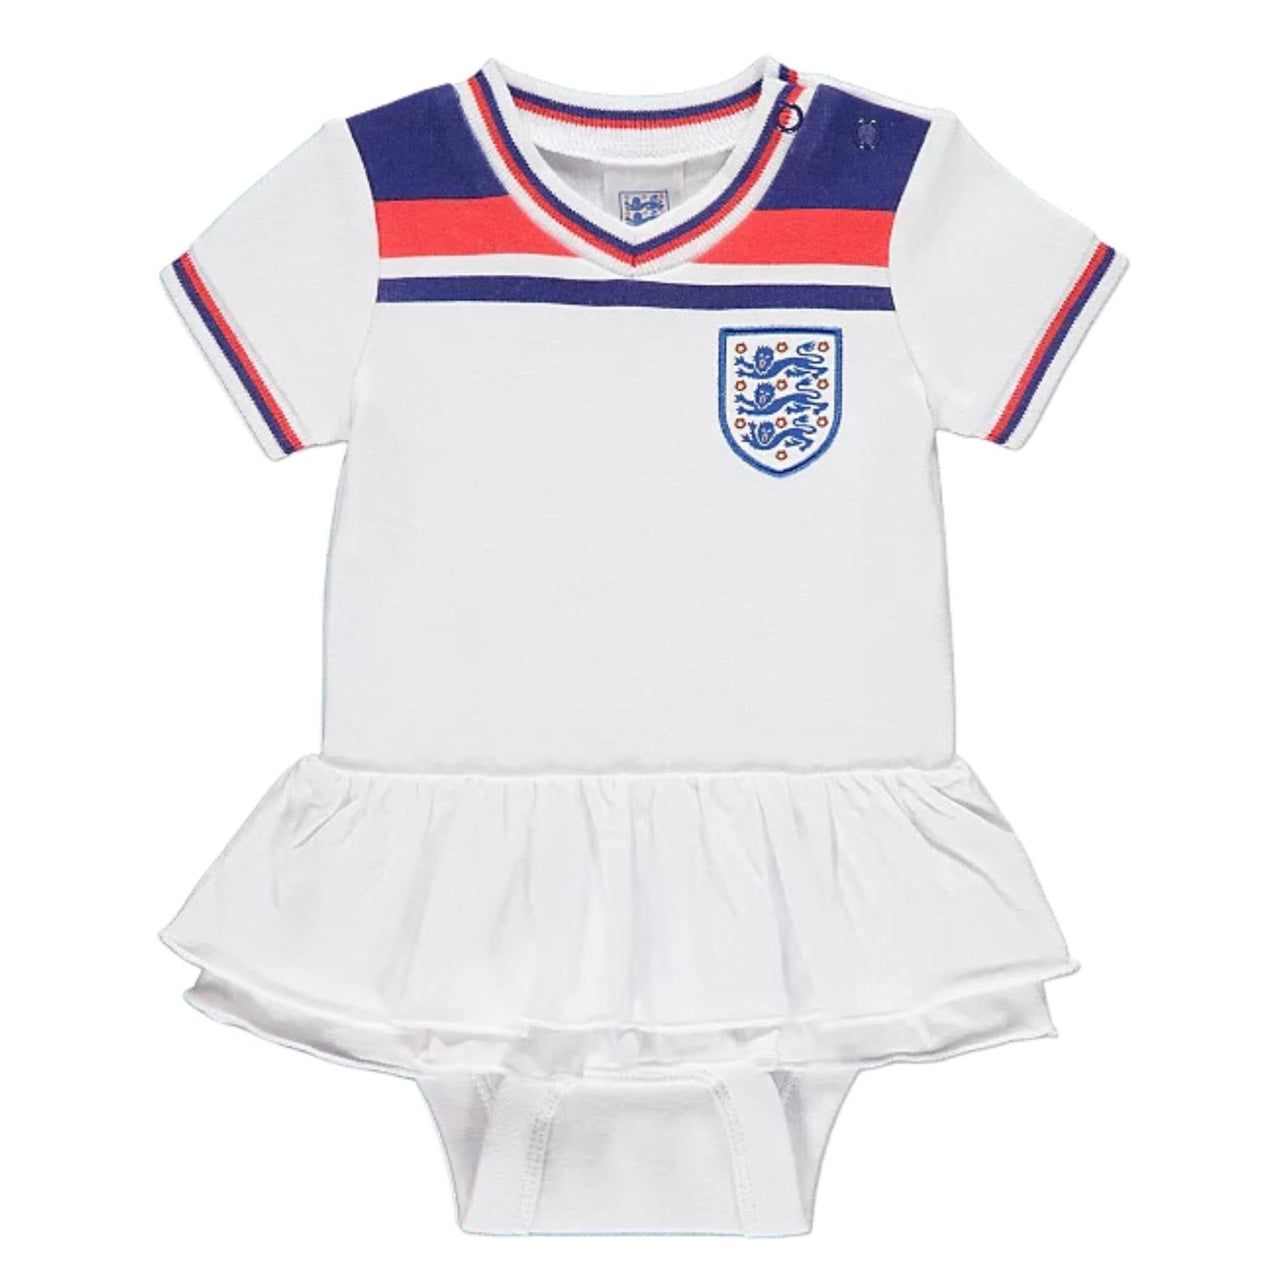 England Football 1982 World Cup Retro Baby Girl's Tutu